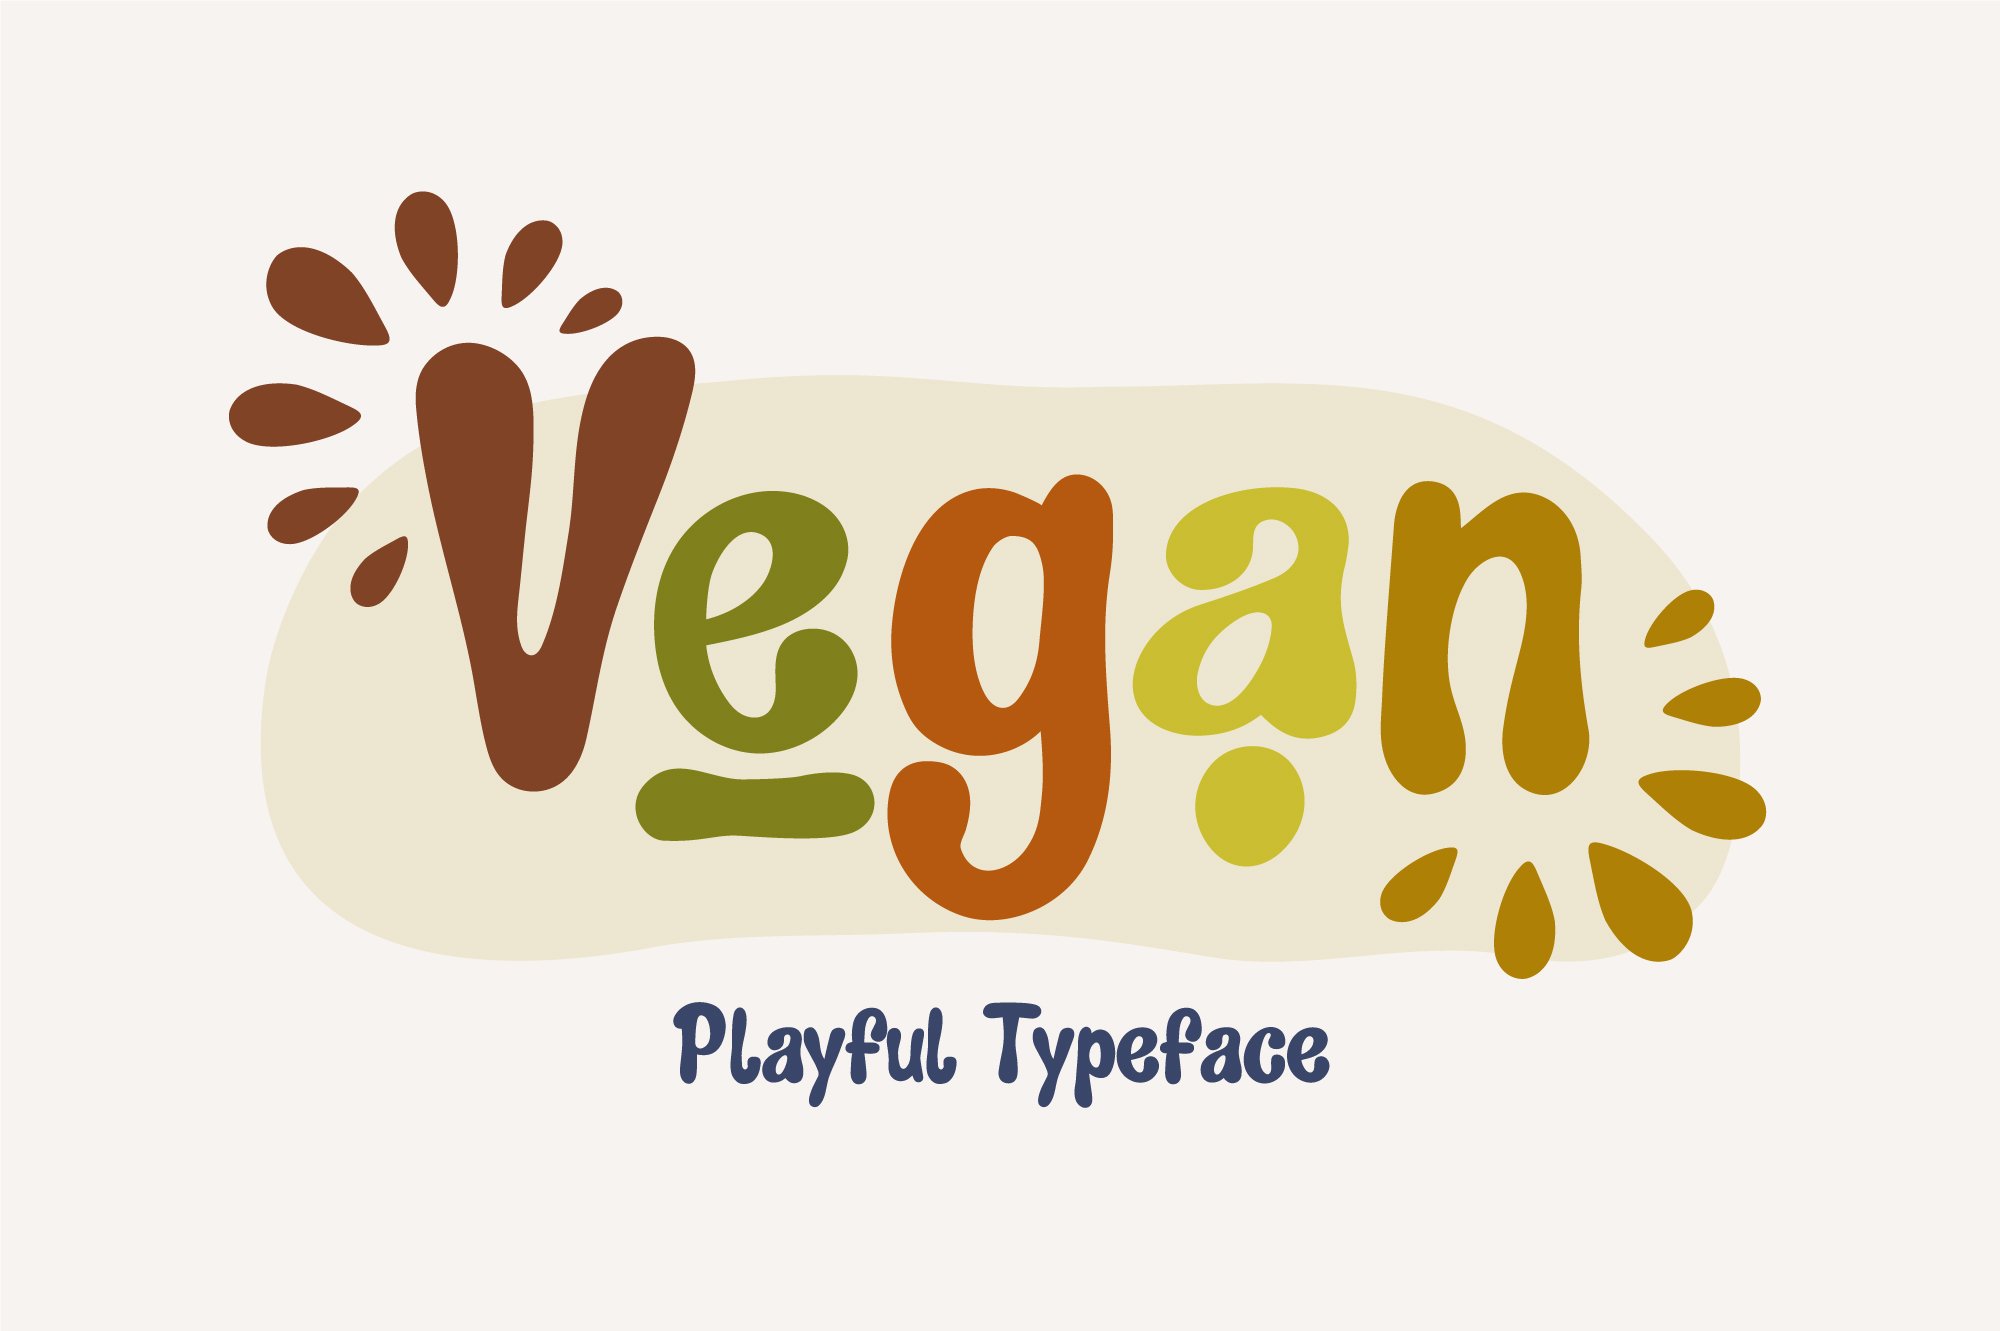 Vegan playful font cover image.